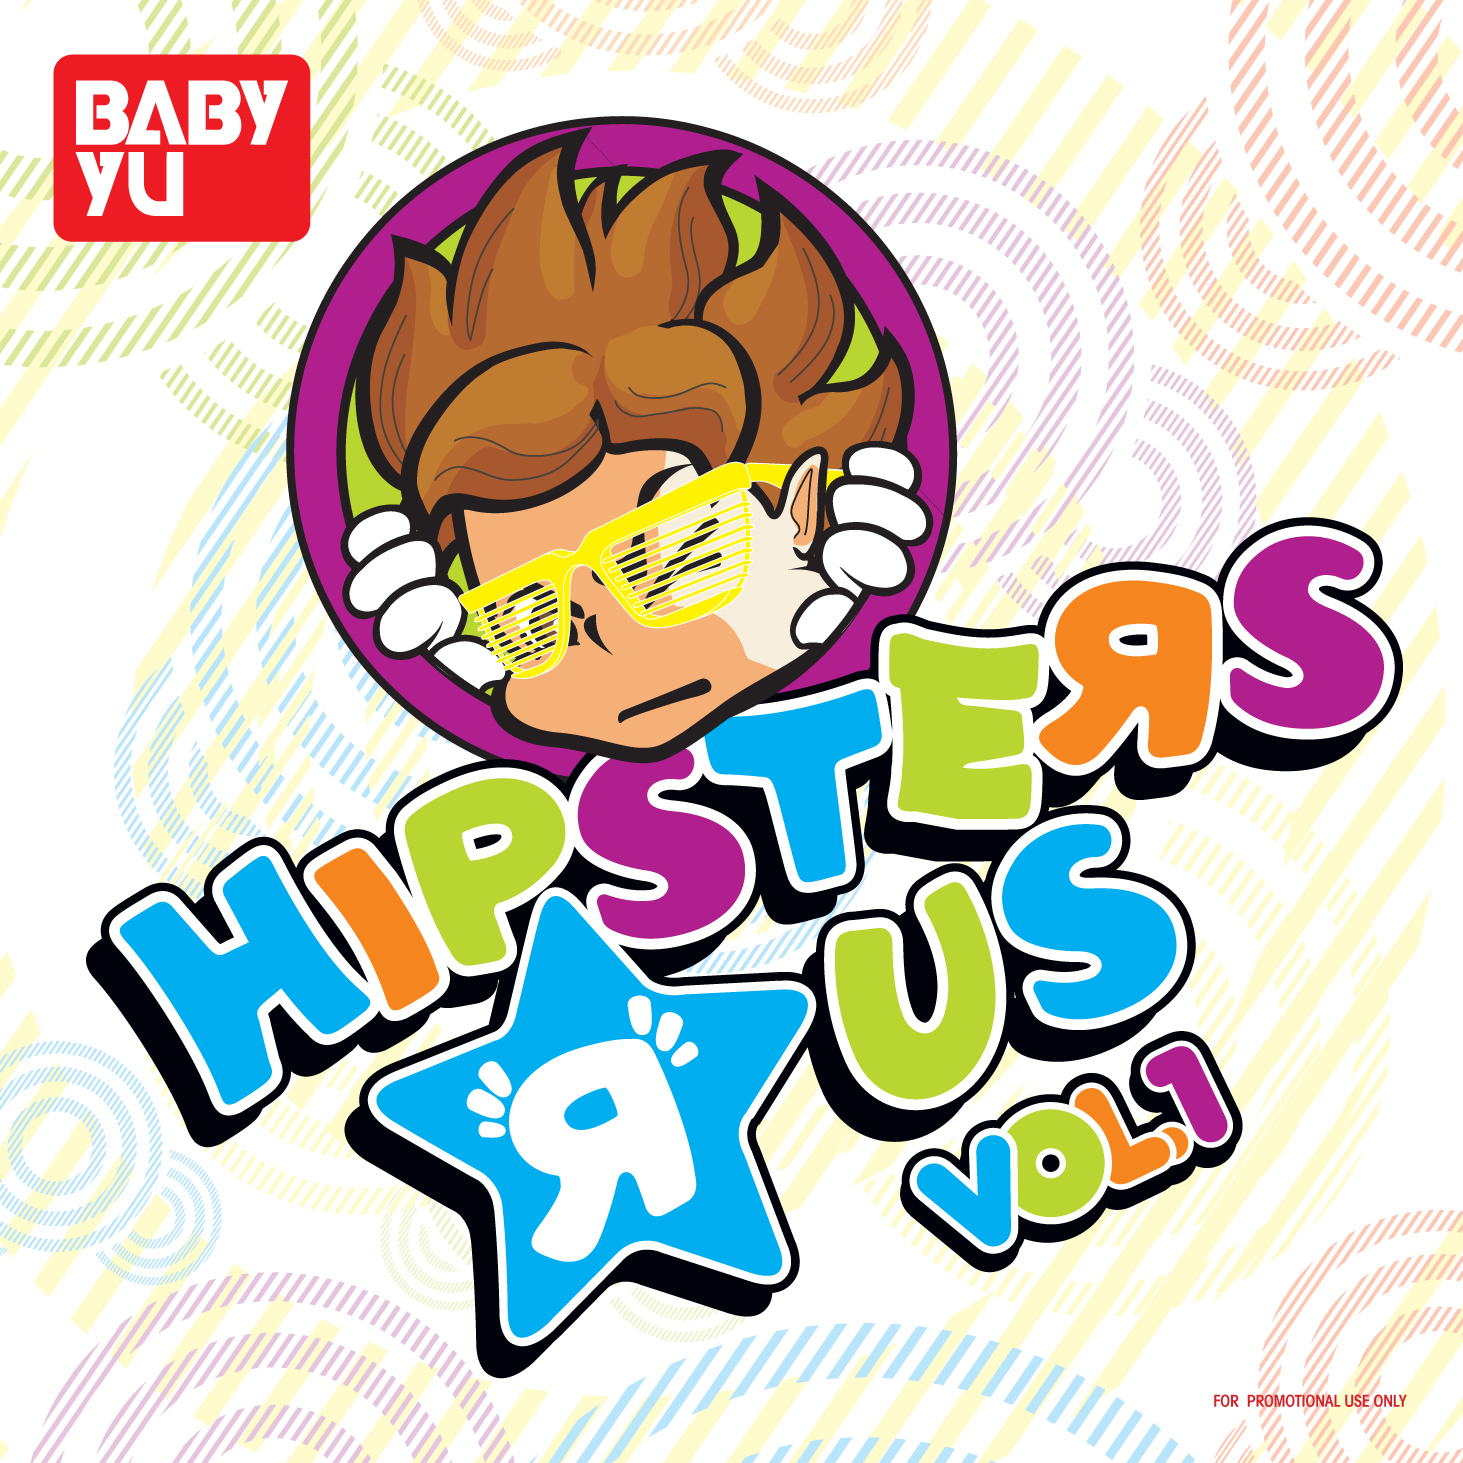 Hipster's 'R' Us Mixtape Vol. 1